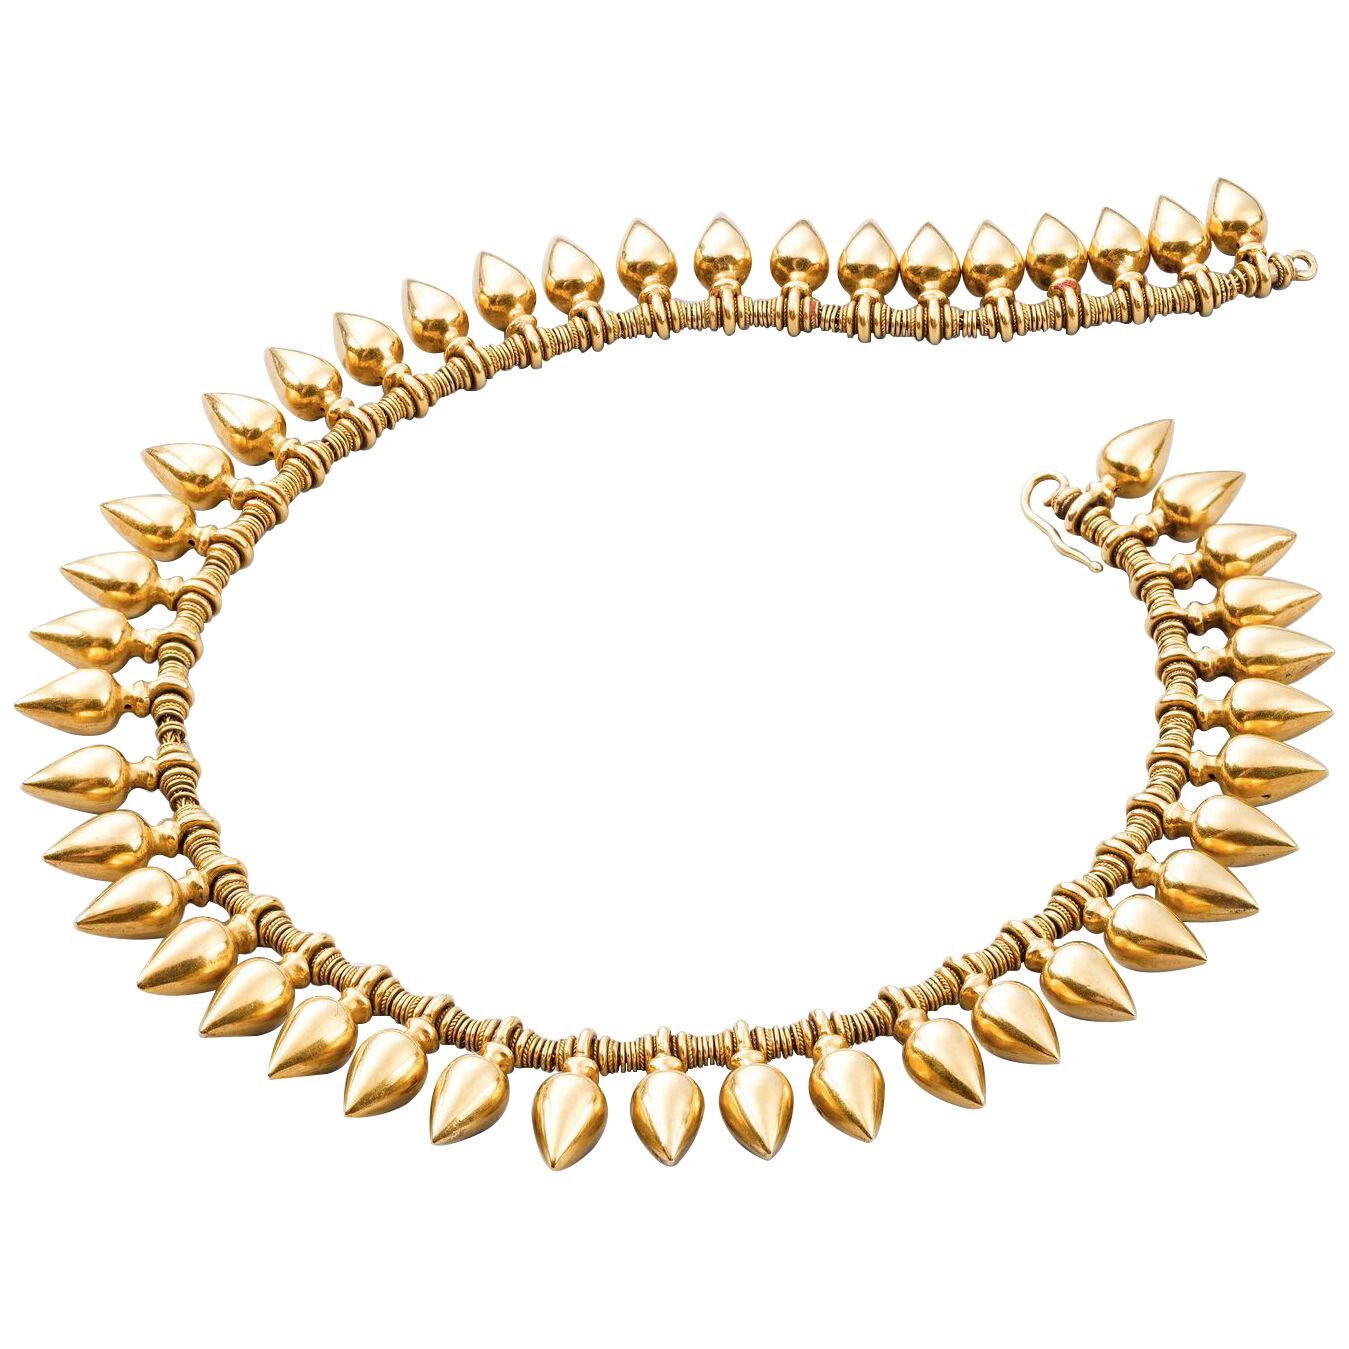 An Elegant Etruscan Revival Gold Necklace